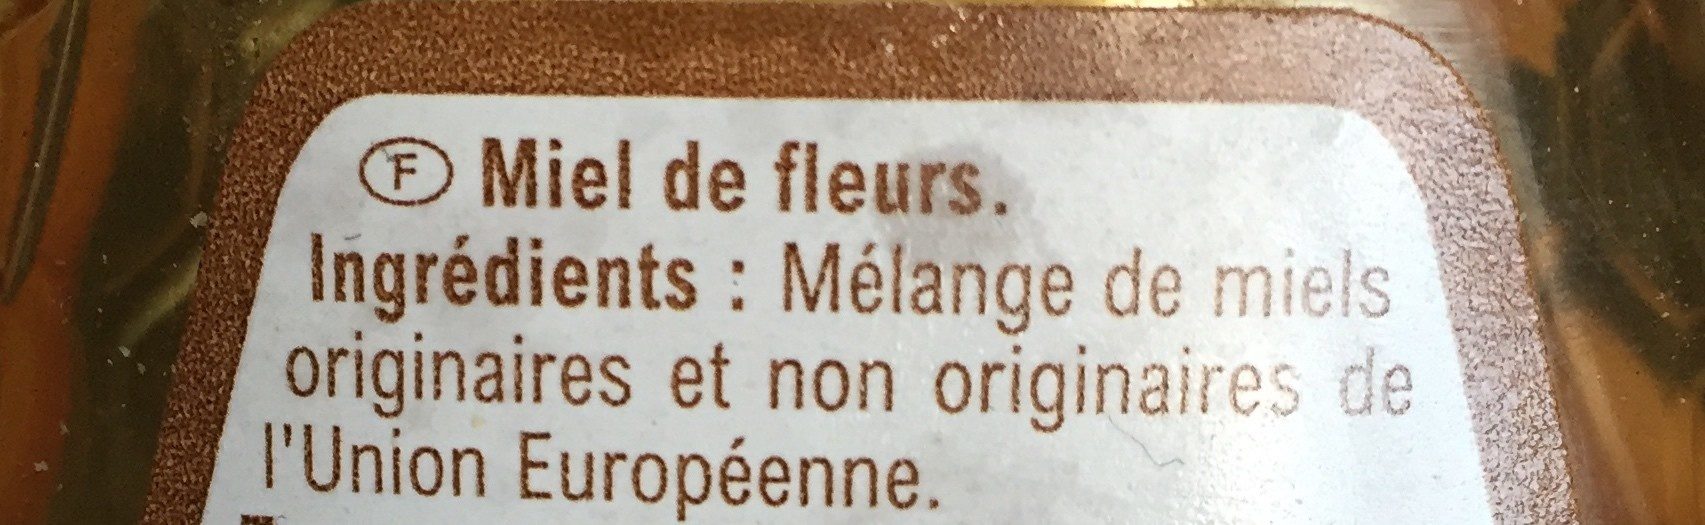 Miel de fleurs - Ingrediënten - fr